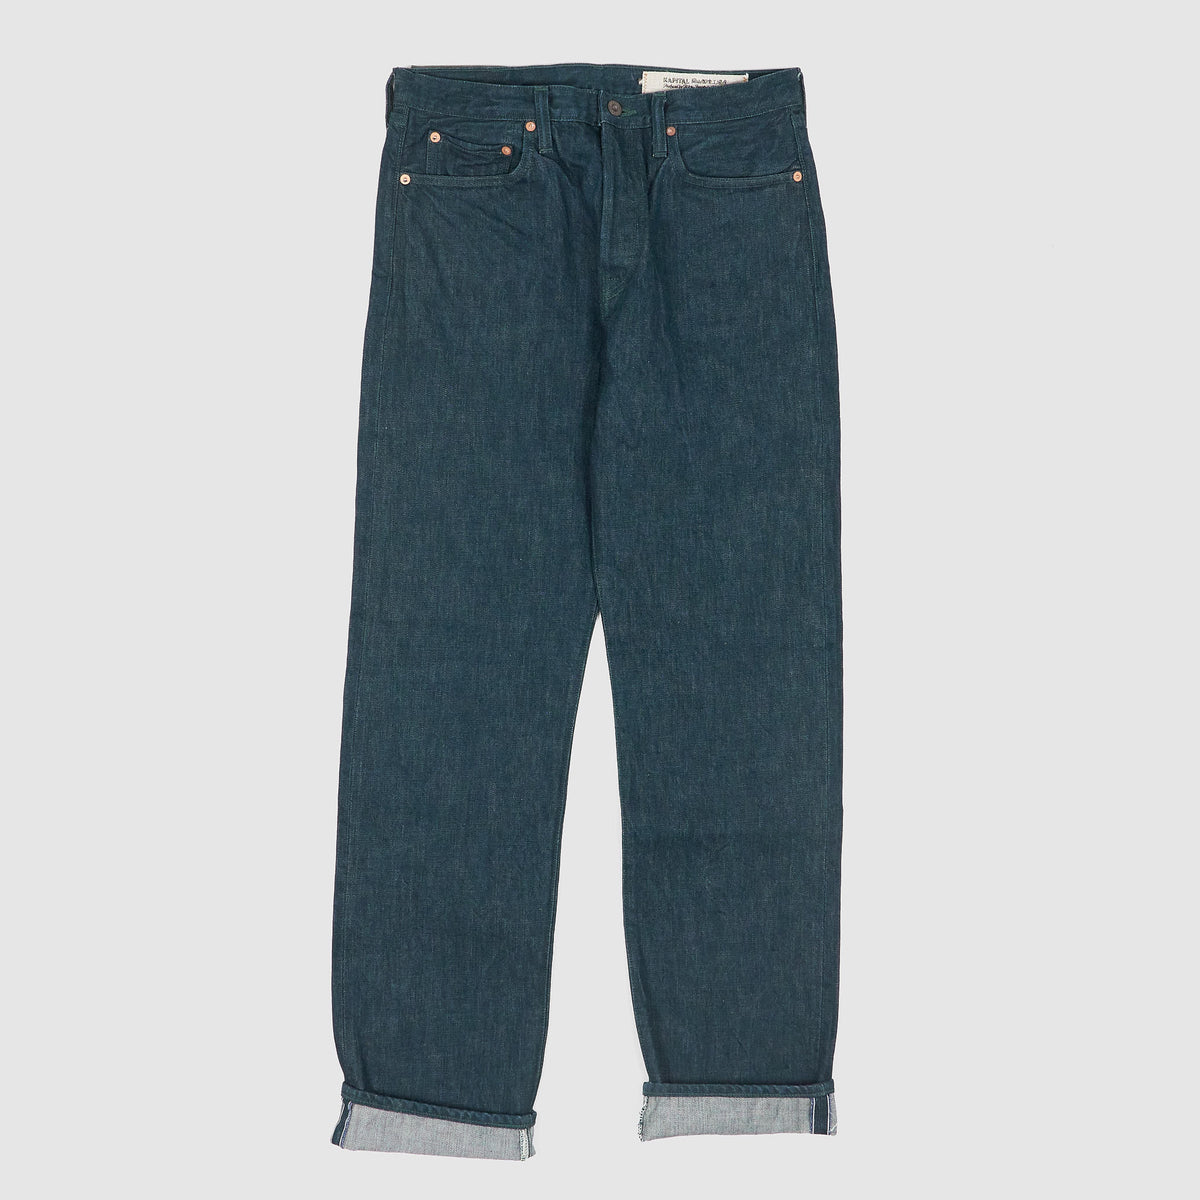 Kapital 5-Pocket MoCi No.4 Plant x Indigo Dyed Jeans